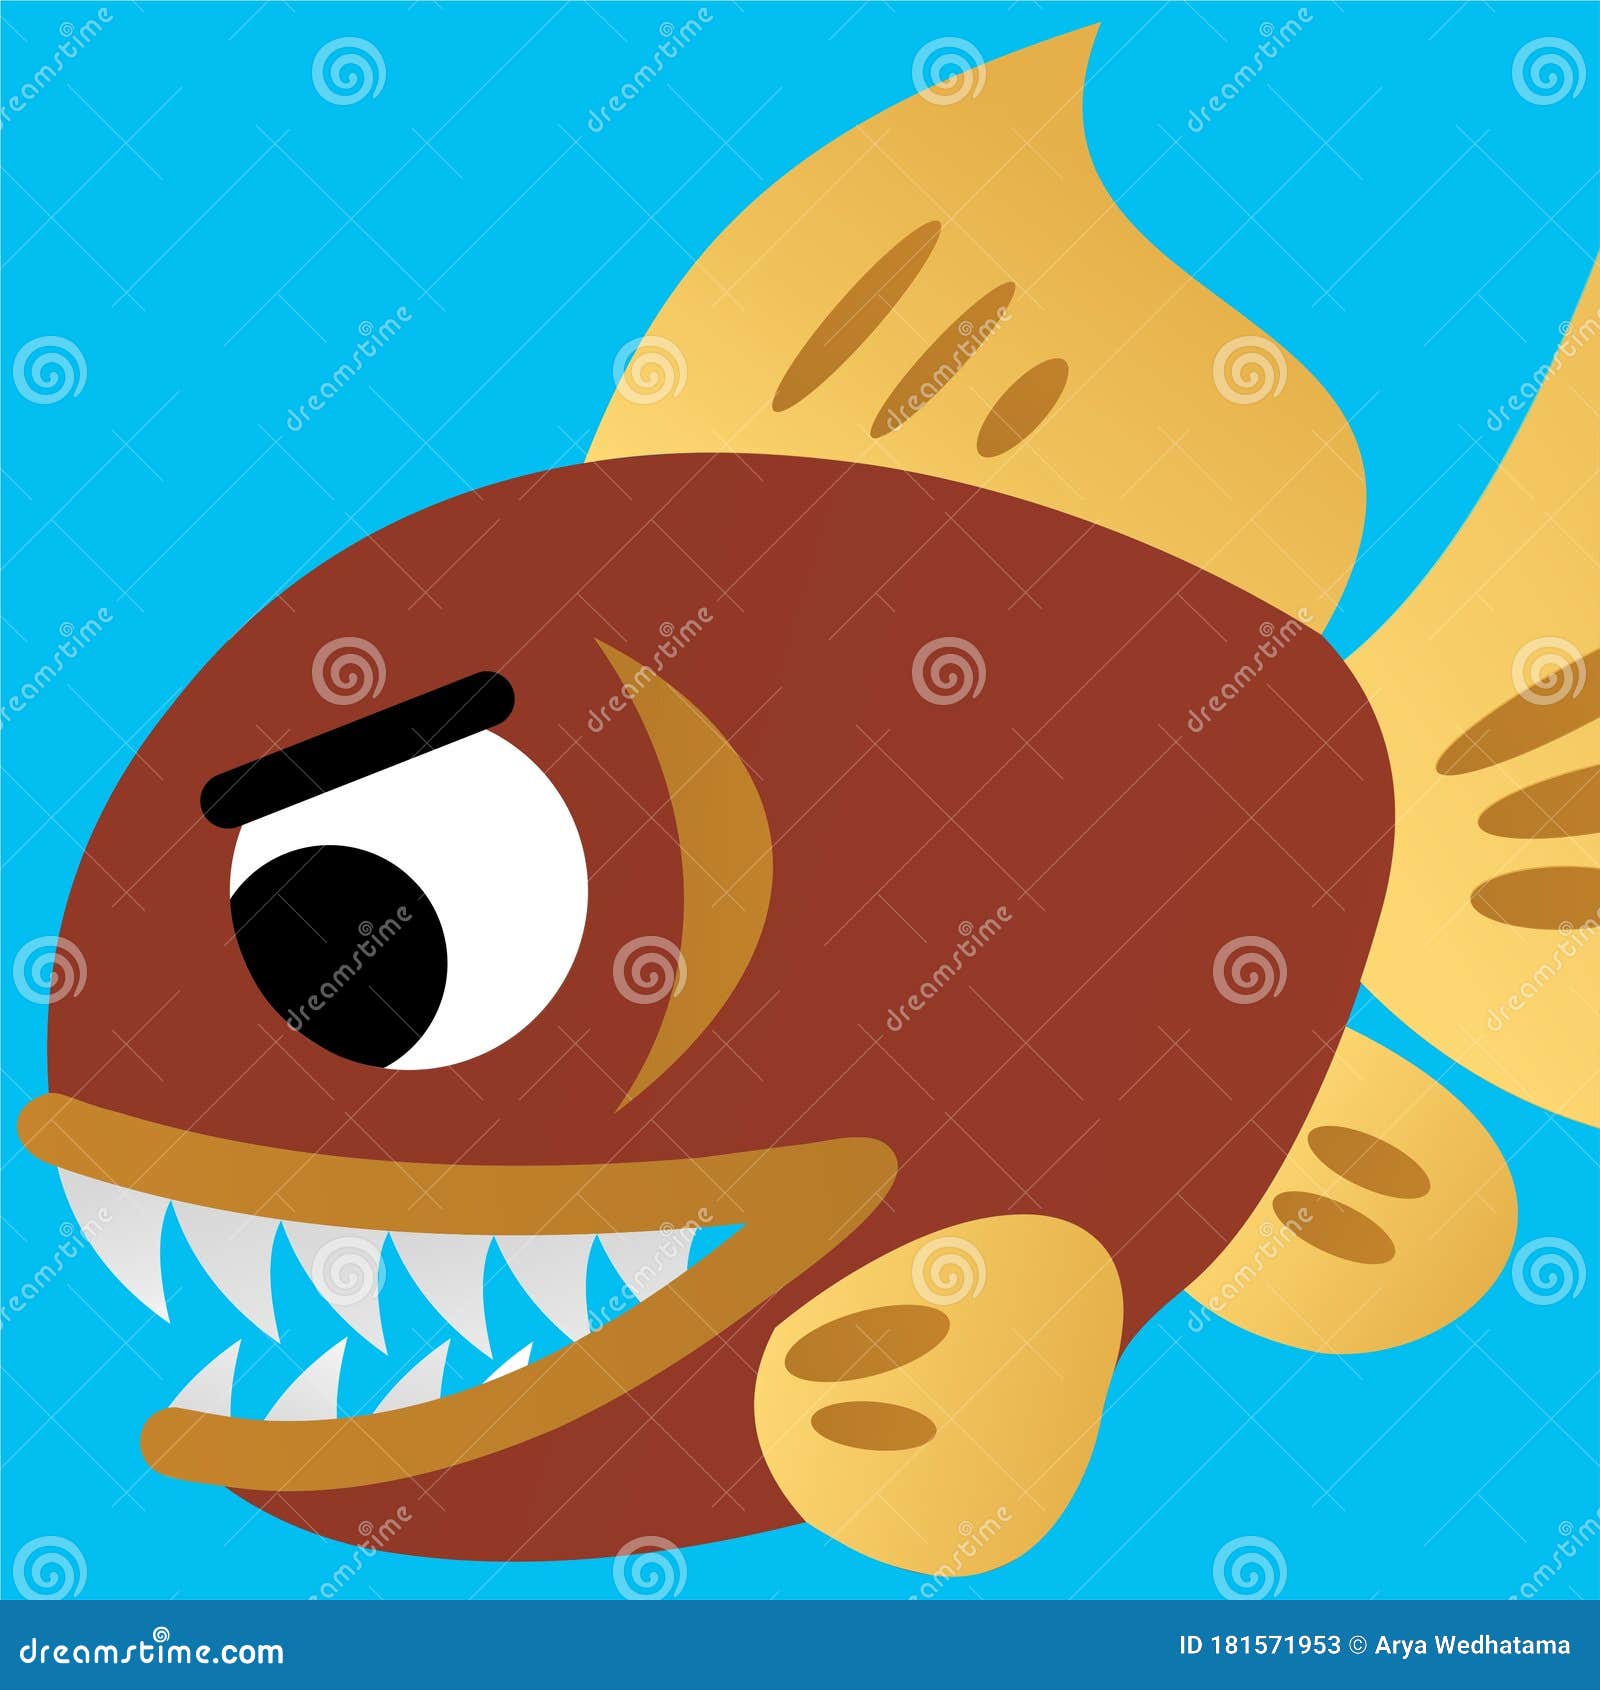 Illustration of Wild Fish Showed Sharp Teeth Cartoon, Cute Funny Character,  Flat Design Stock Illustration - Illustration of nature, shadow: 181571953